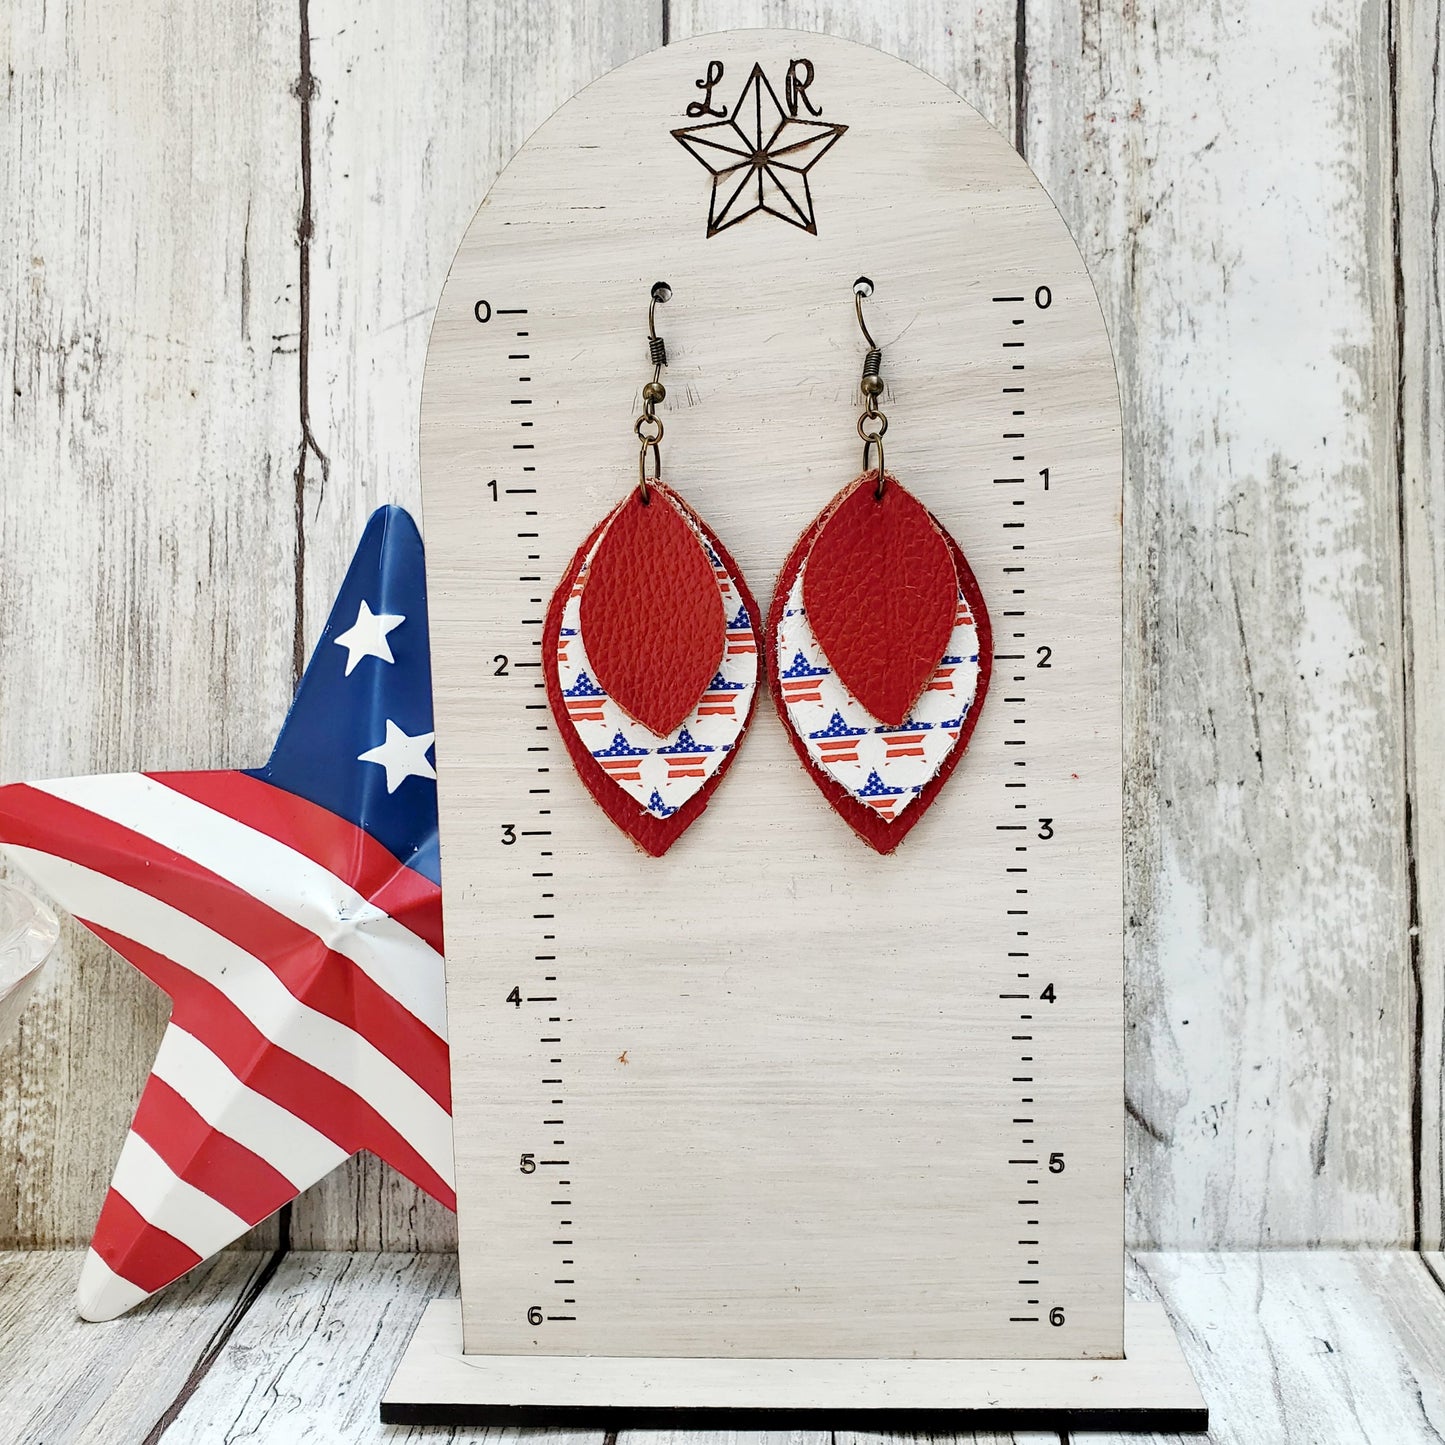 Betsy - layered leather earrings - patriotic earrings - americana earrings - 4th of July earrings - Memorial Day earrings - Veterans Day earrings